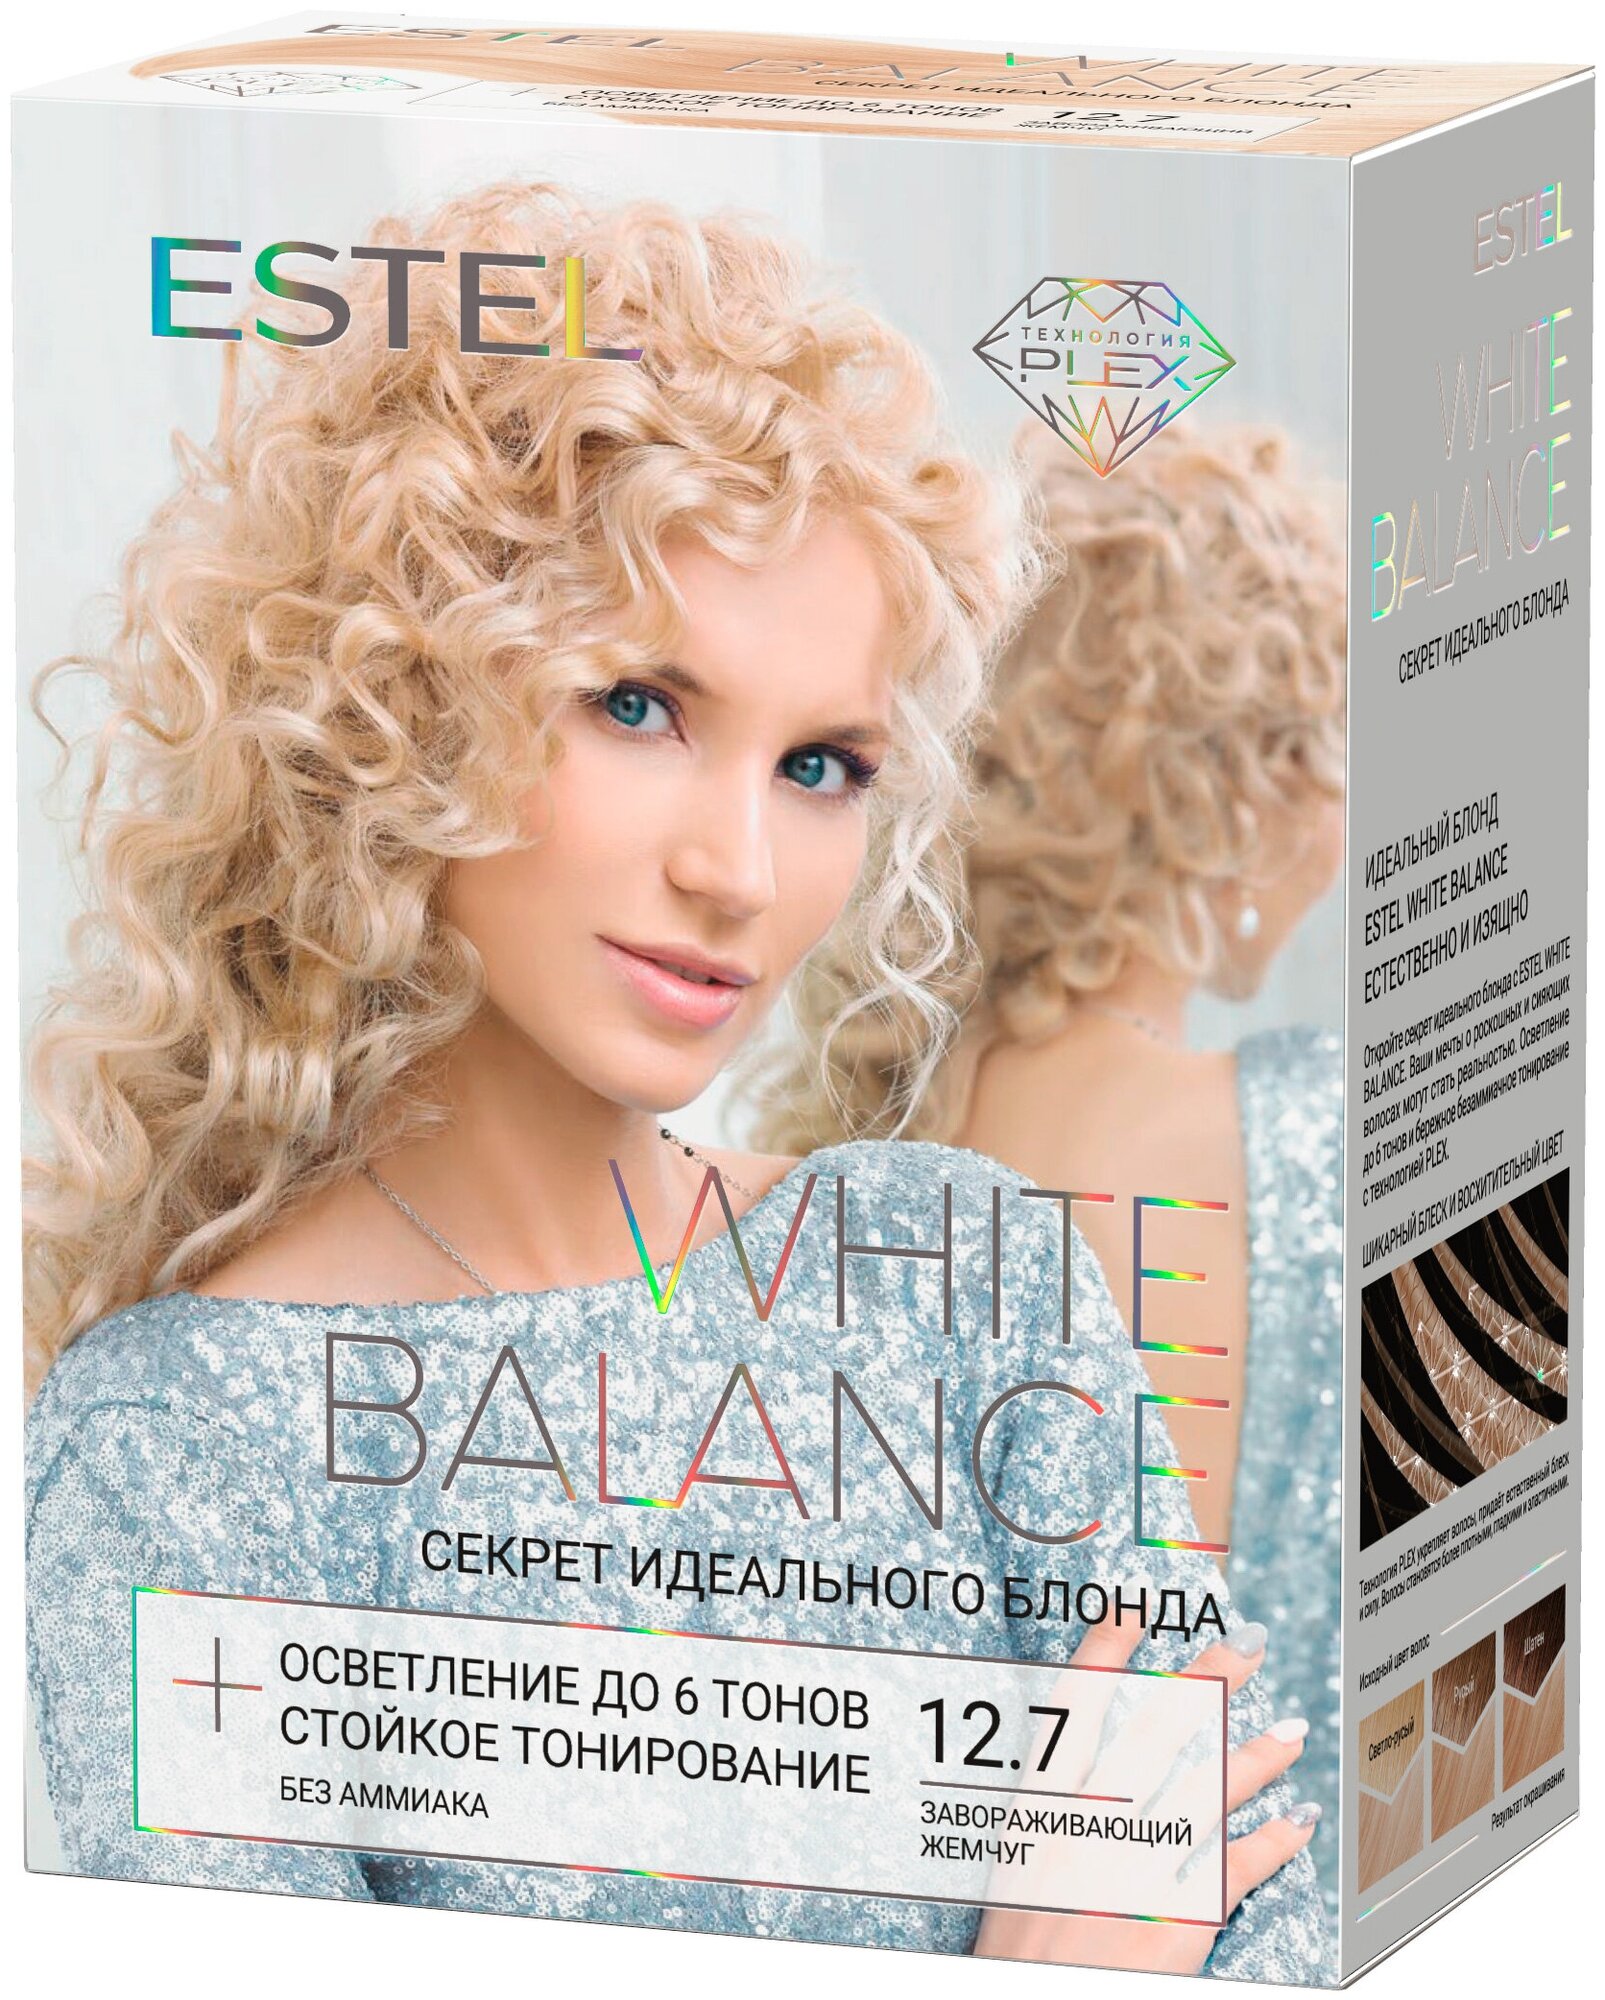 ESTEL White balance краска для волос, 12.7 завораживающий жемчуг